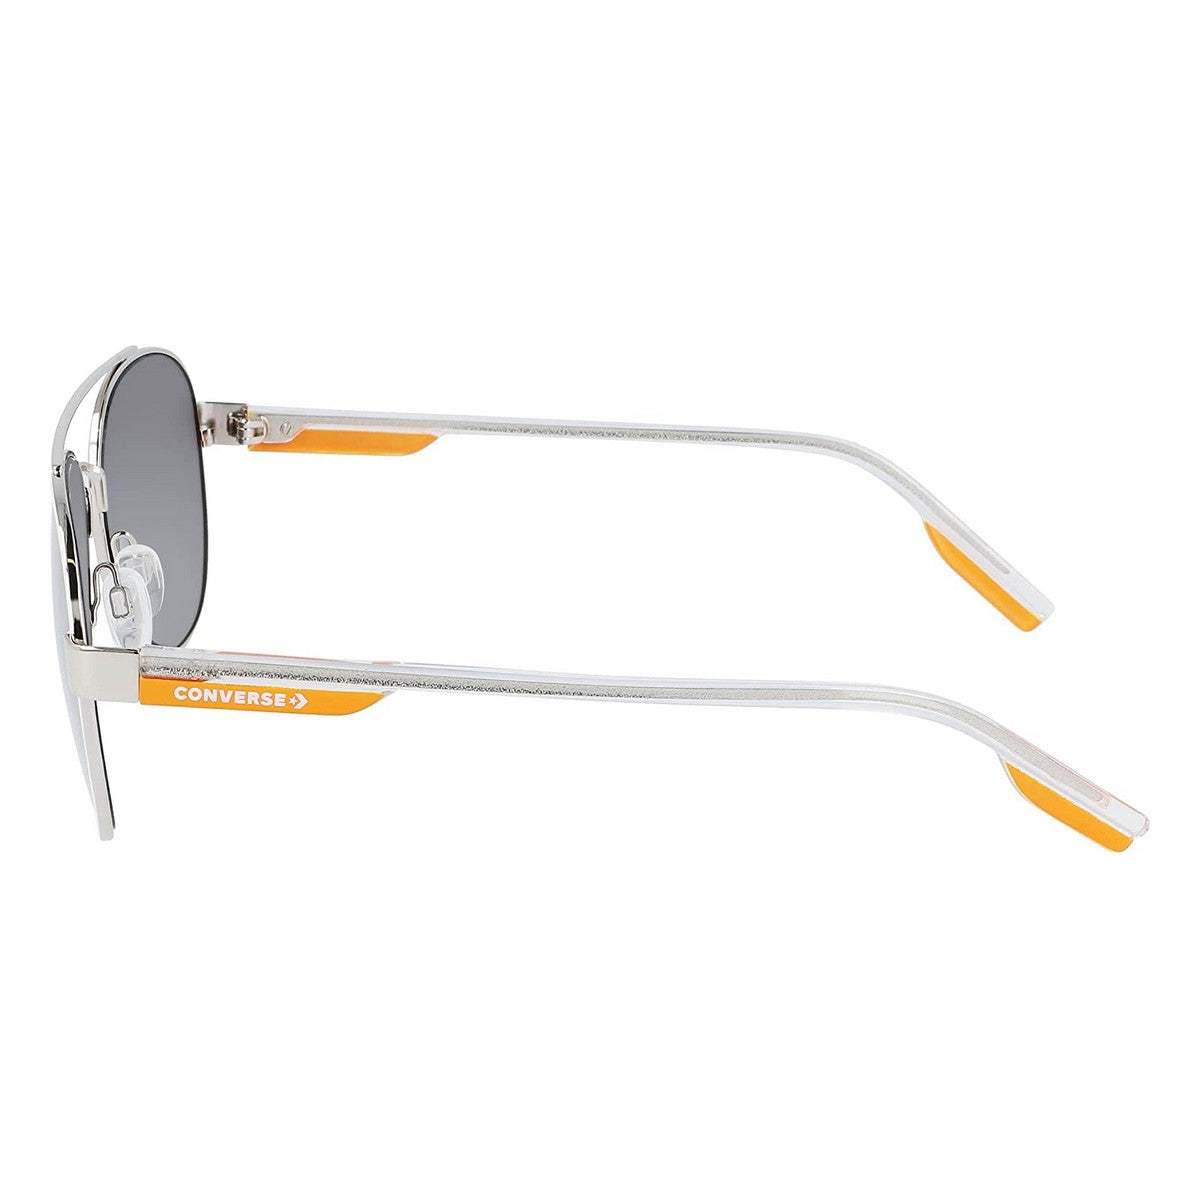 Kaufe Herrensonnenbrille Converse CV300S-DISRUPT-100 ø 58 mm bei AWK Flagship um € 55.00